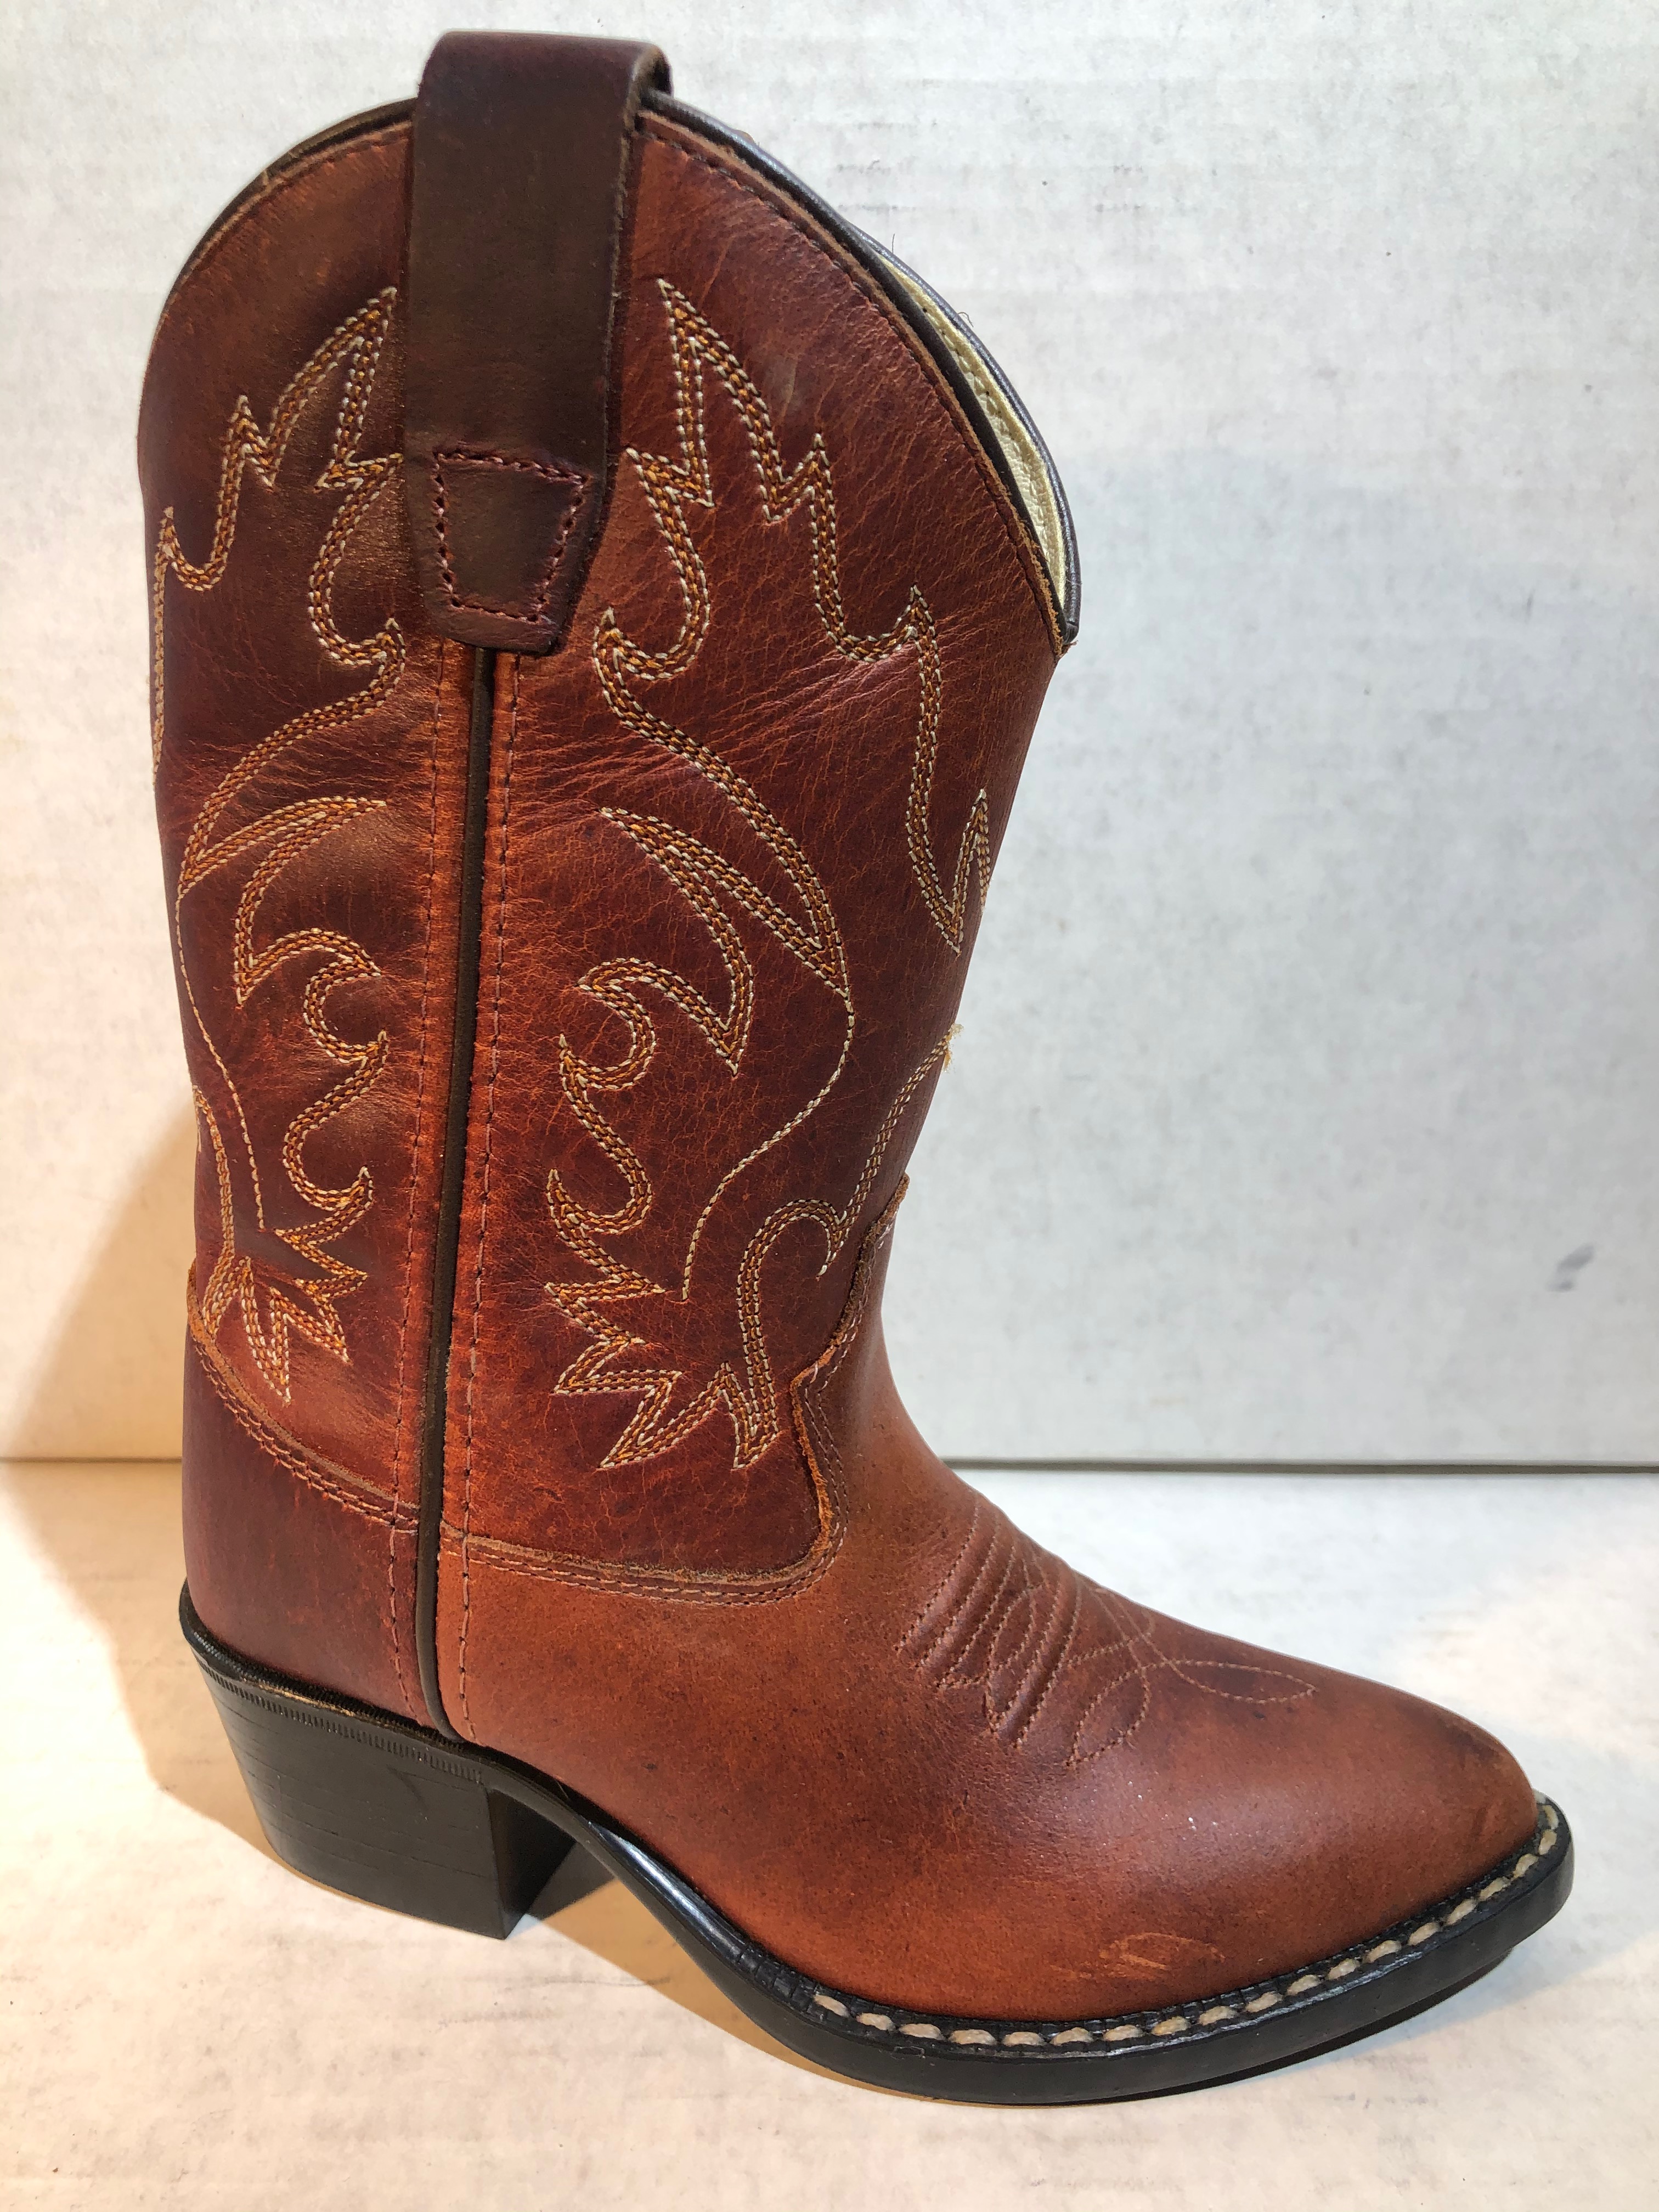 Little Kid's Old West Cowboy Boots (10.5)